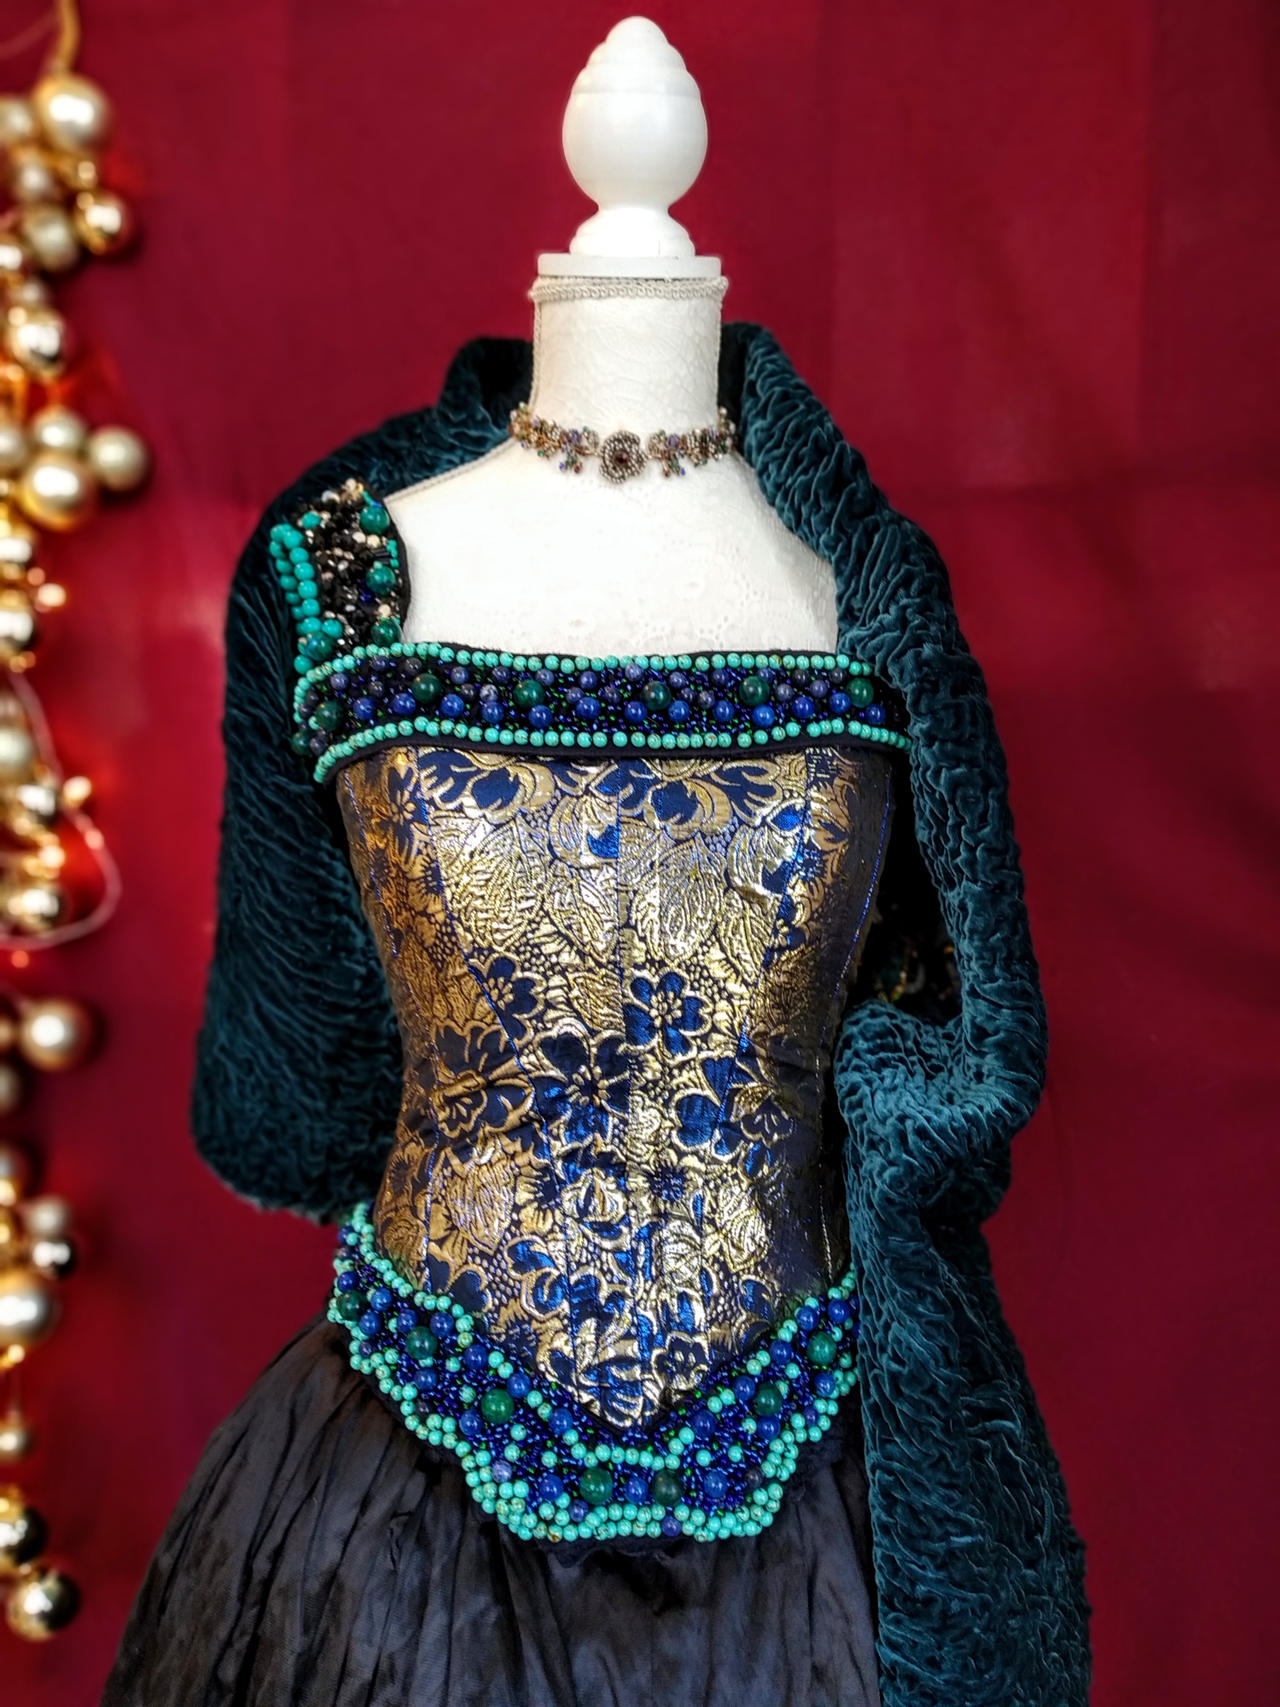 Anne Boleyn stage dress by Allada on DeviantArt